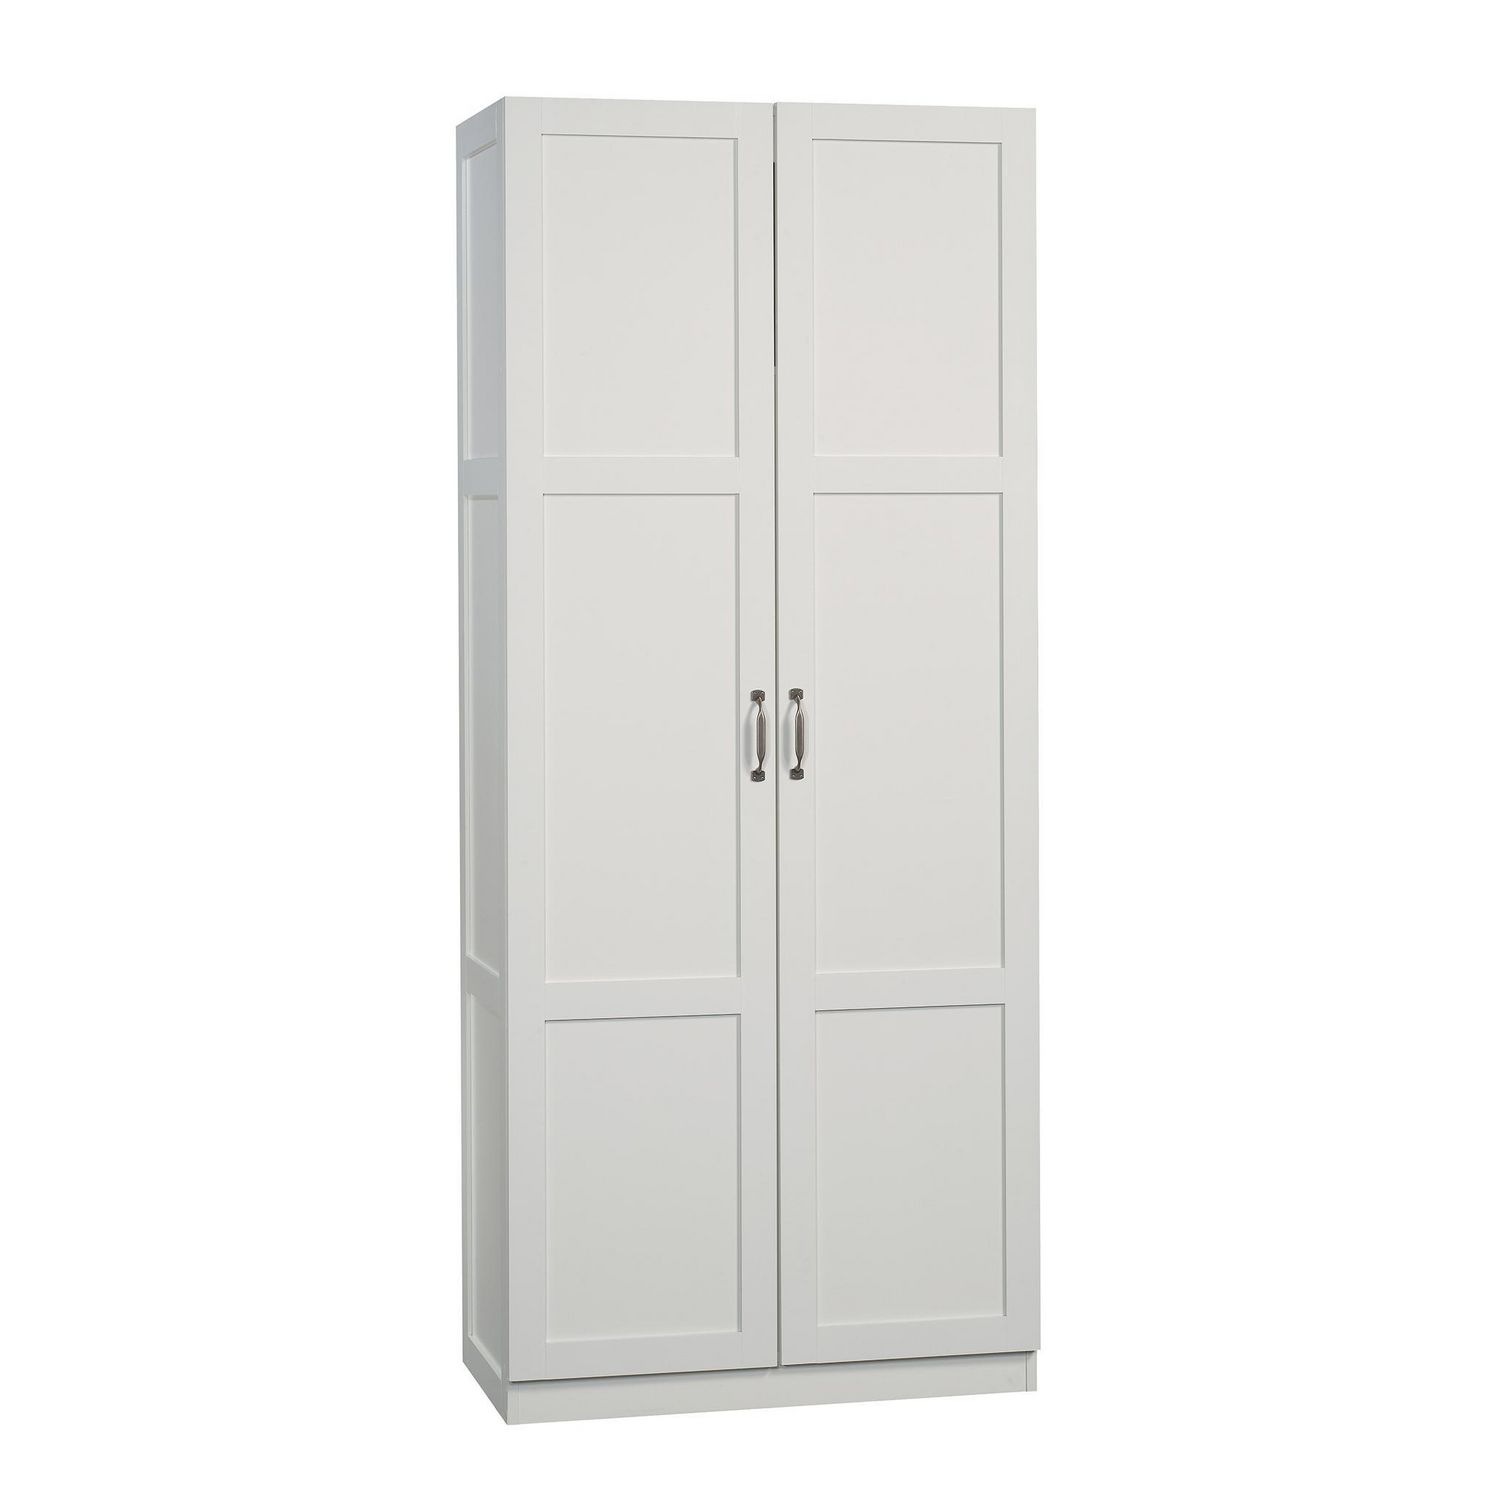 Sauder Select Storage Cabinet, Sauder 2 Door Pantry Storage Cabinet White